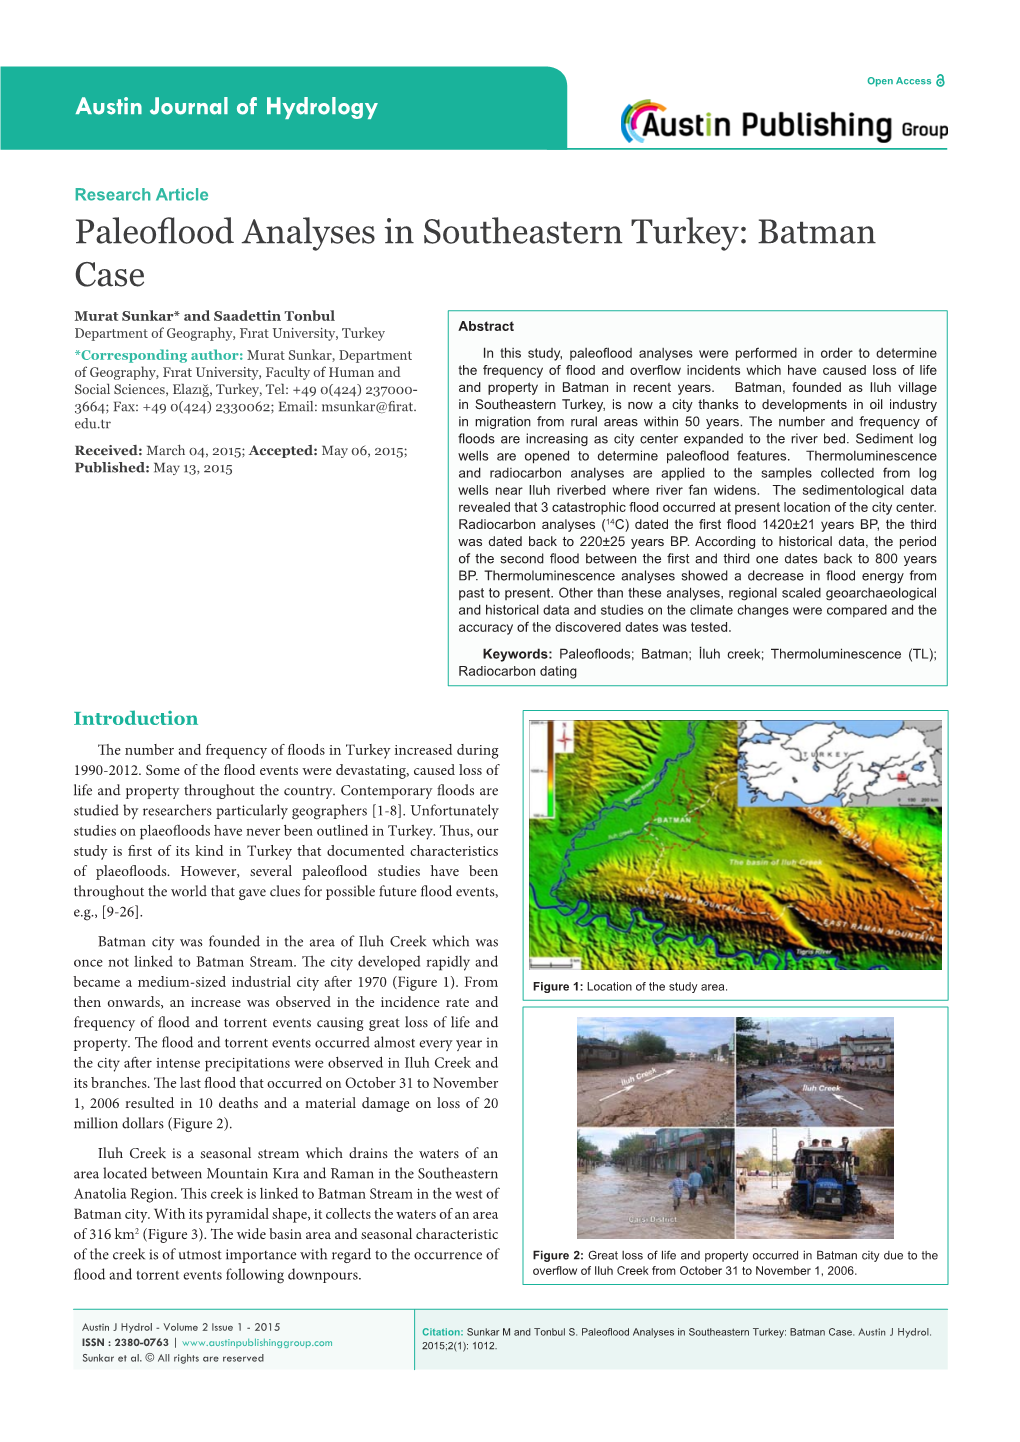 Paleoflood Analyses in Southeastern Turkey: Batman Case